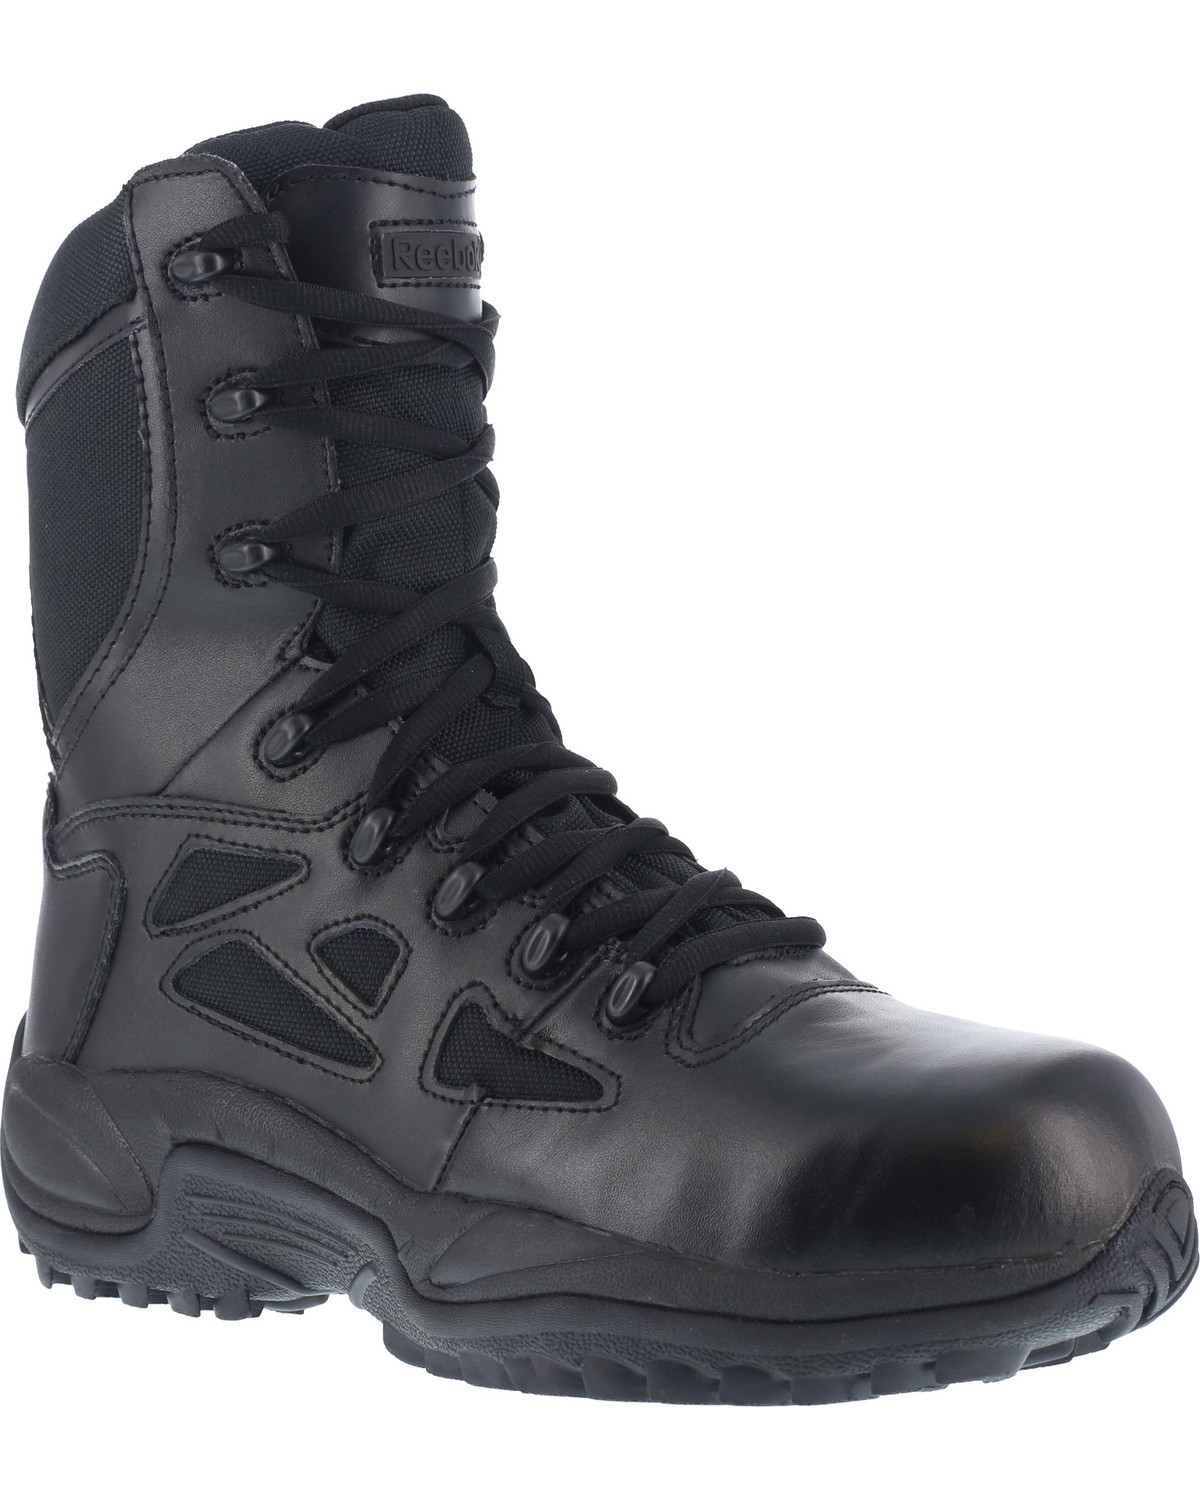 Reebok Women's 8" Side-Zip Rapid Response Tactical Boots - Round Toe